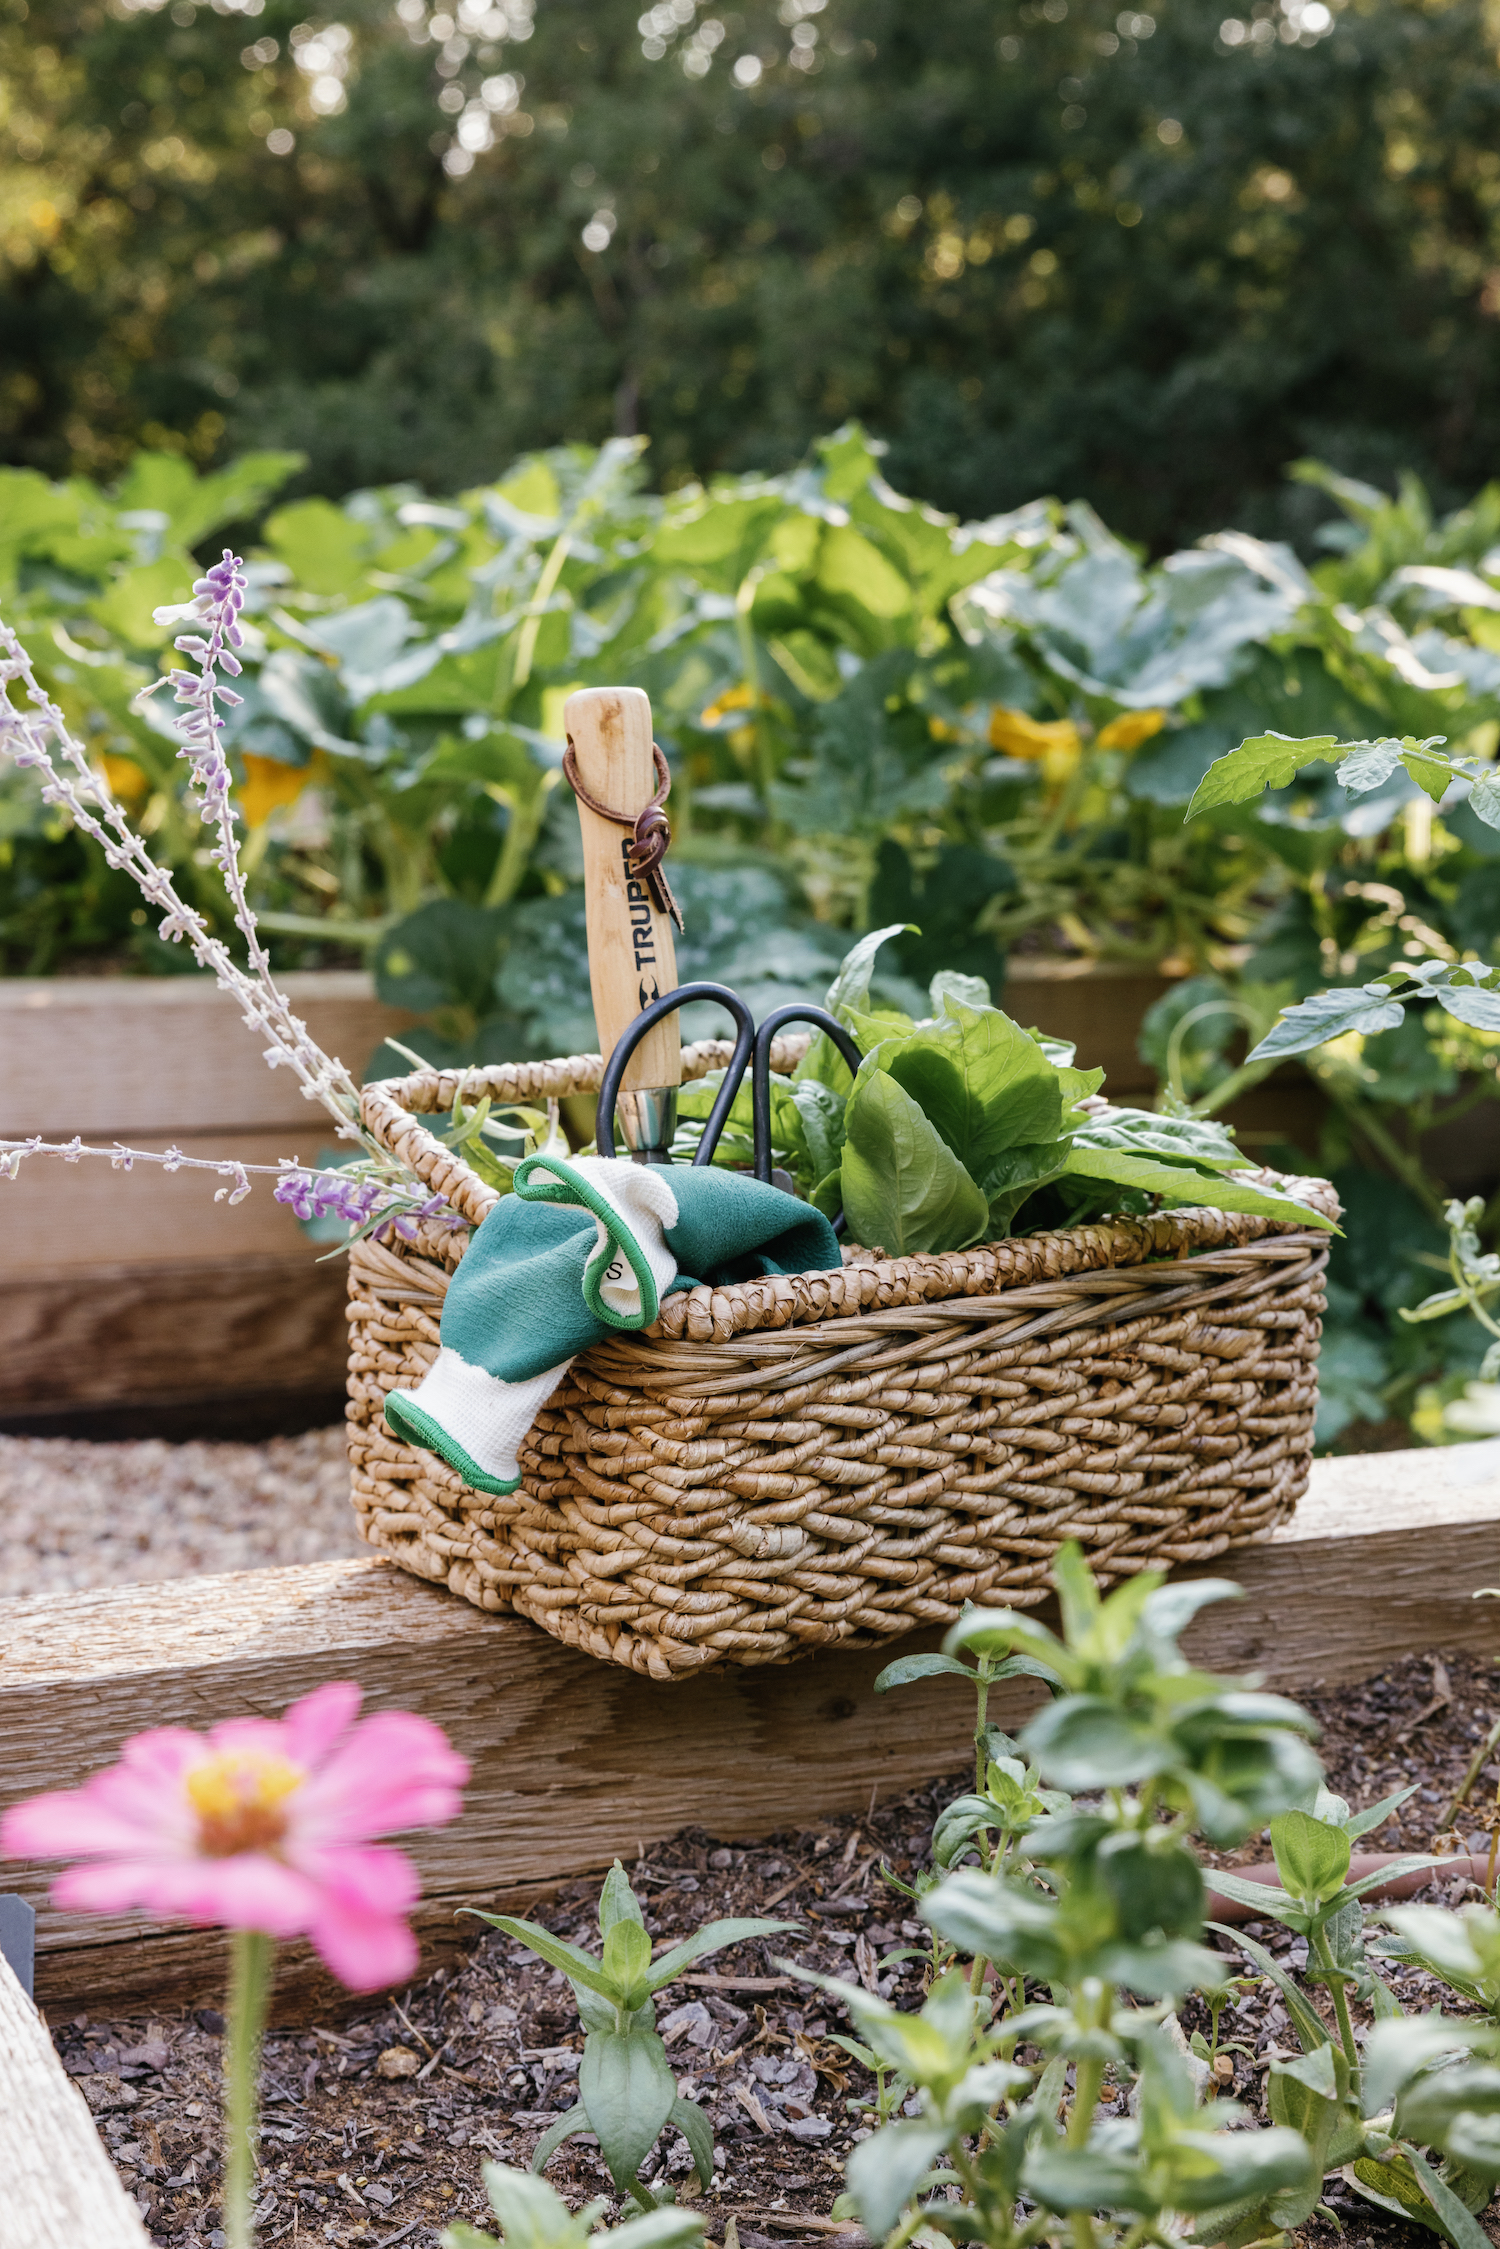 camille styles backyard - how to build raised garden beds - vegetable garden - garden supplies and basket